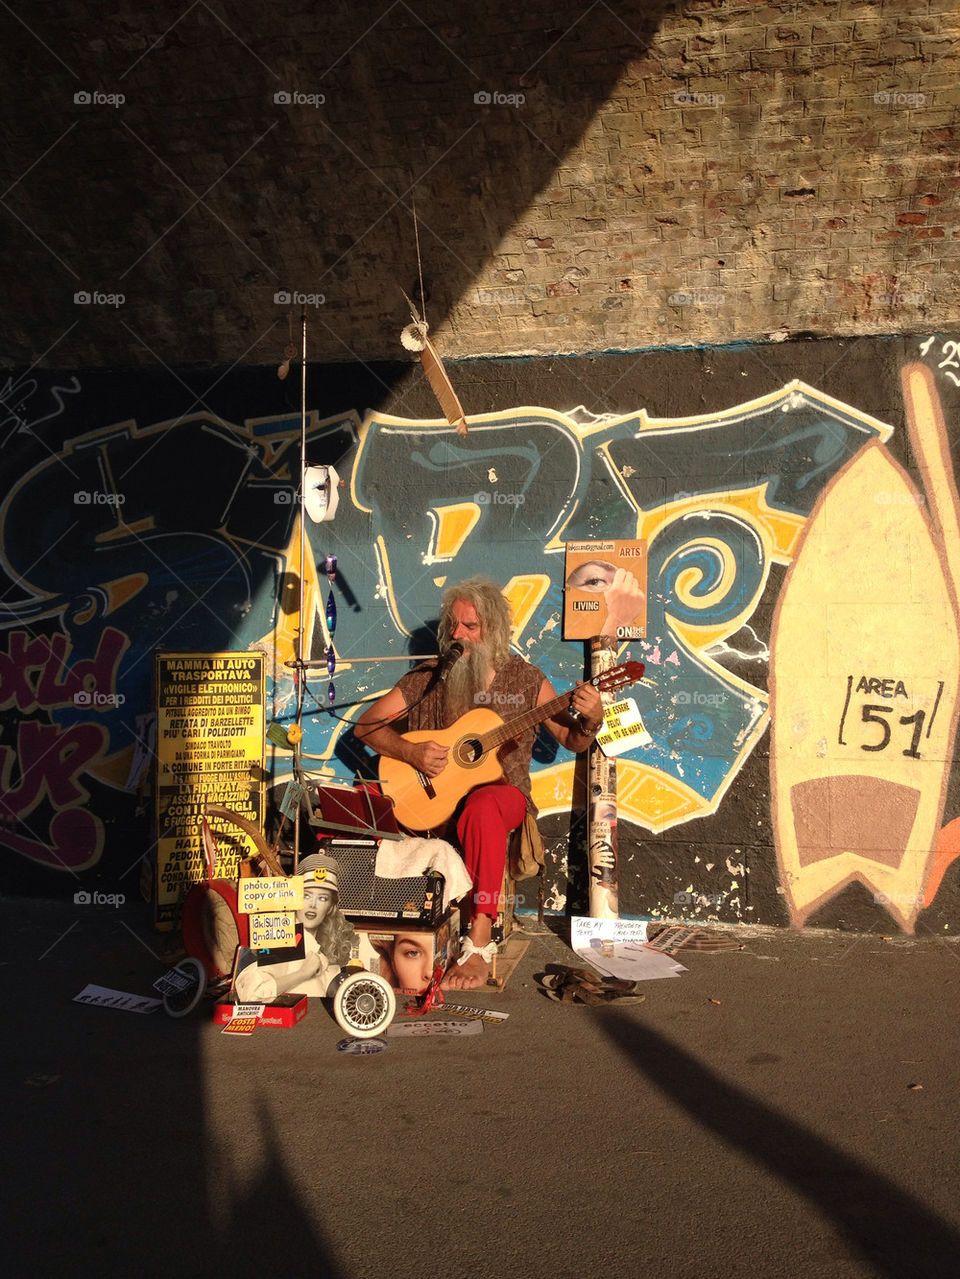 street music performer concert by adrianocastelli